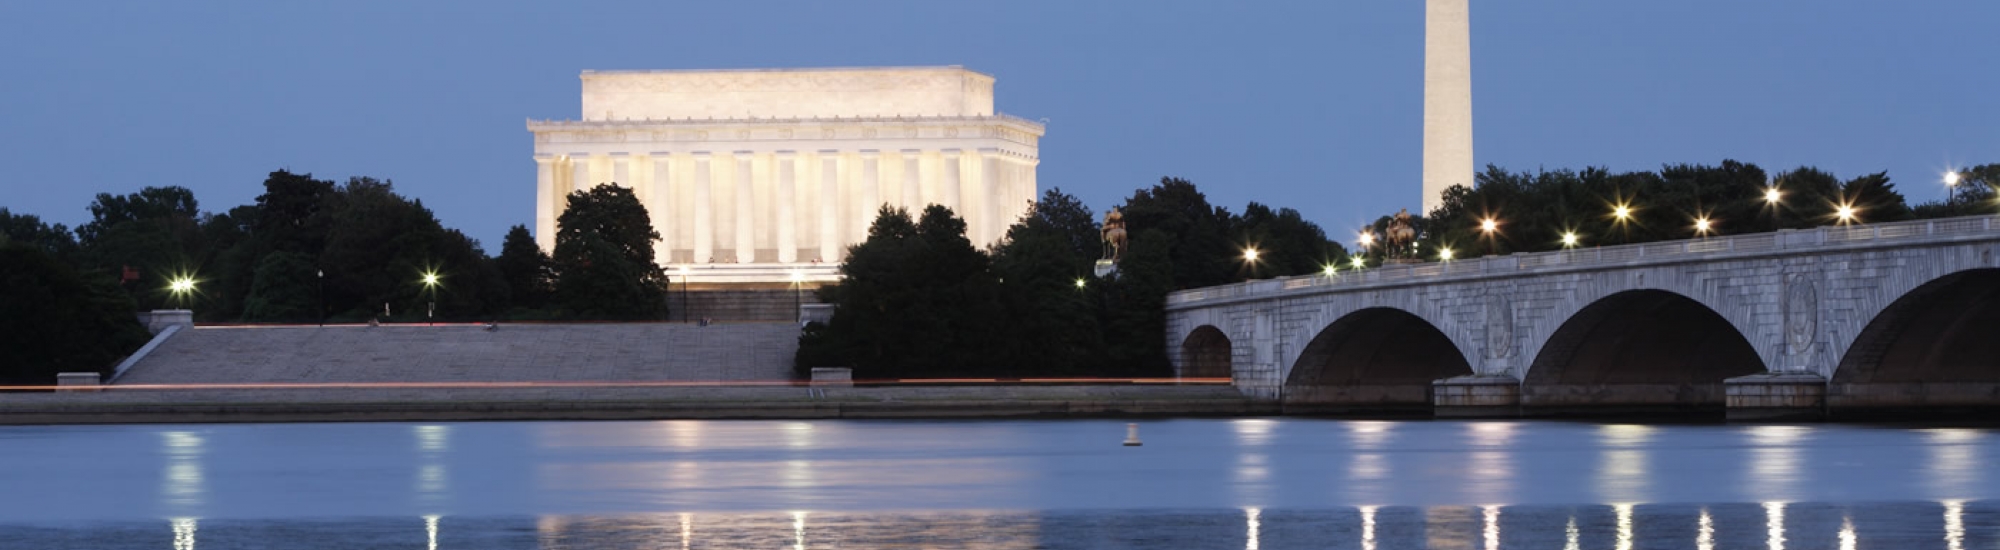 Monuments and Potomac River at night